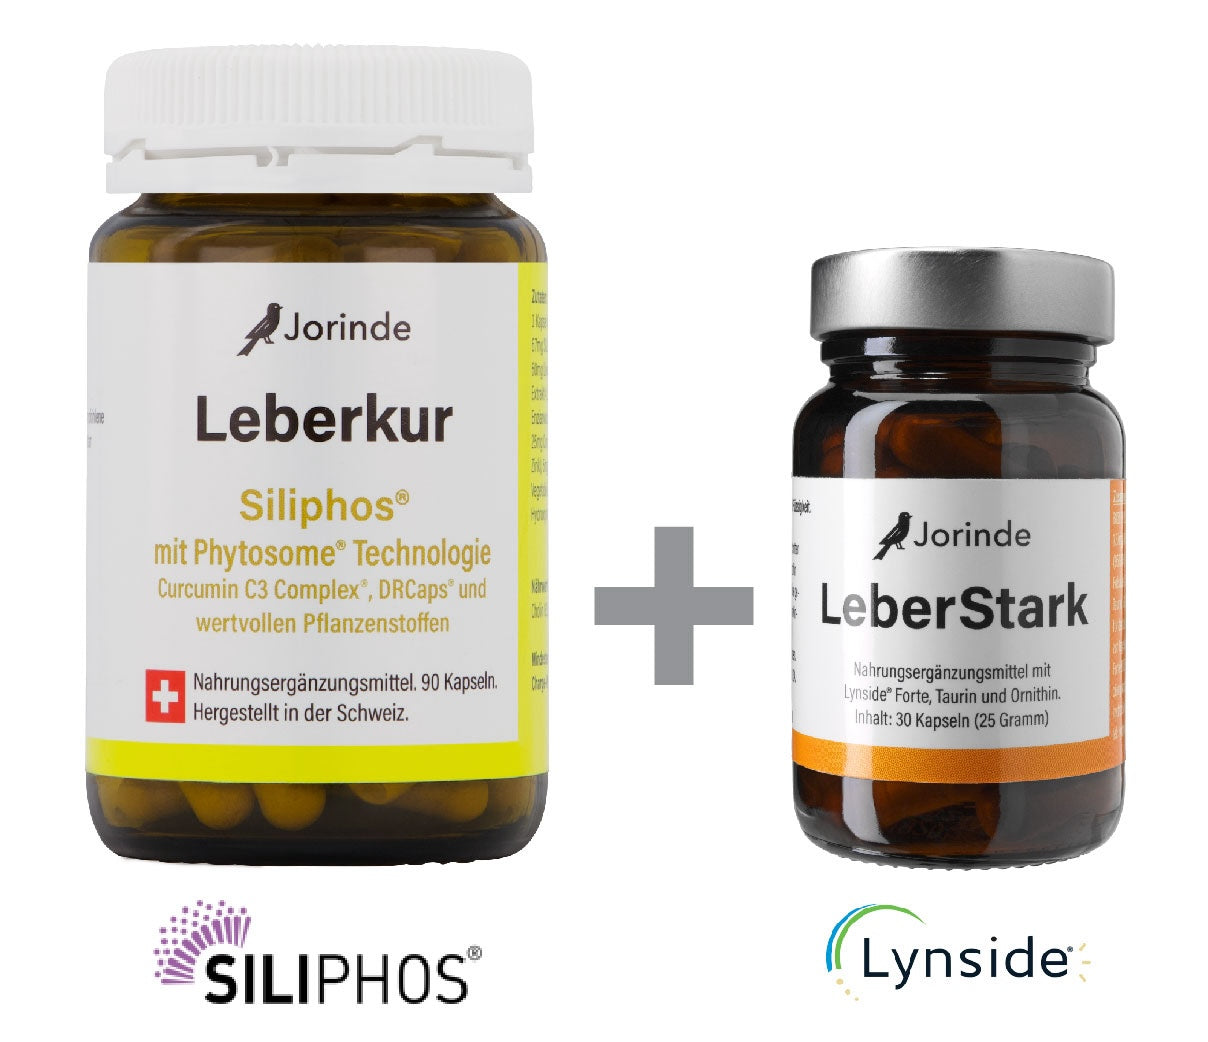 Kombination Jorinde Leberkur und LeberStark